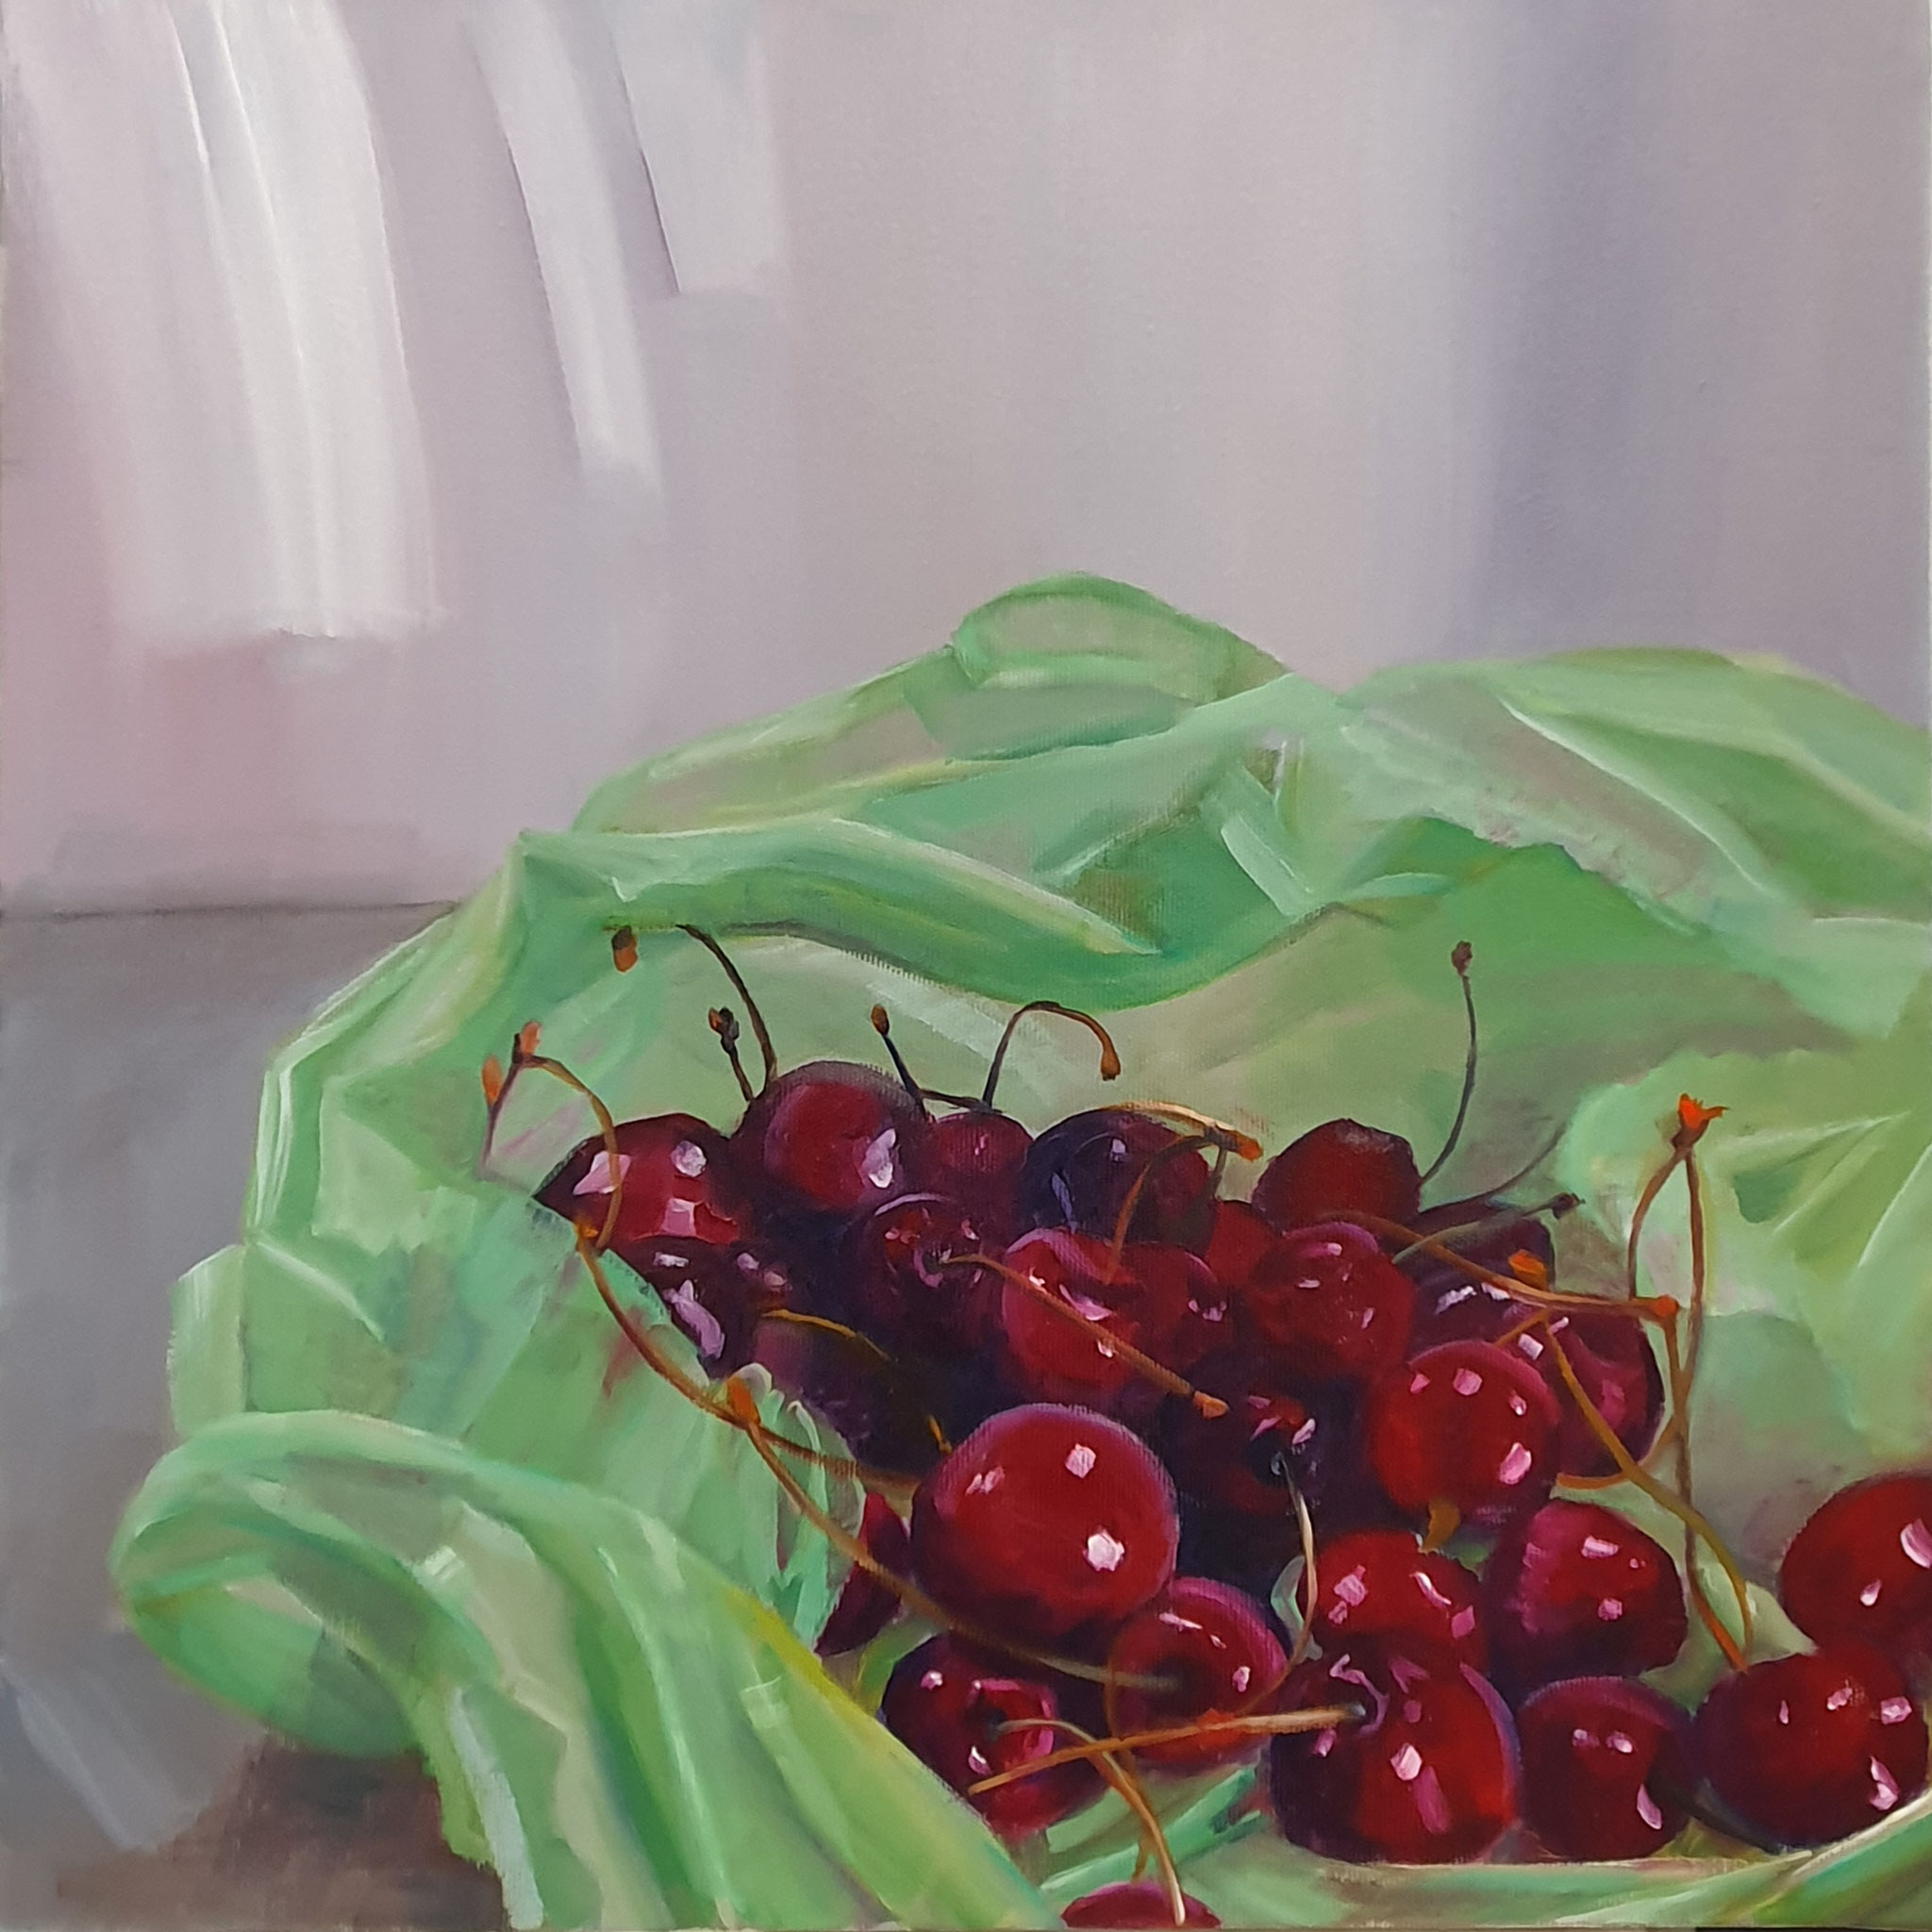 Cherries, Öl auf Leinwand, 50cm x 50cm